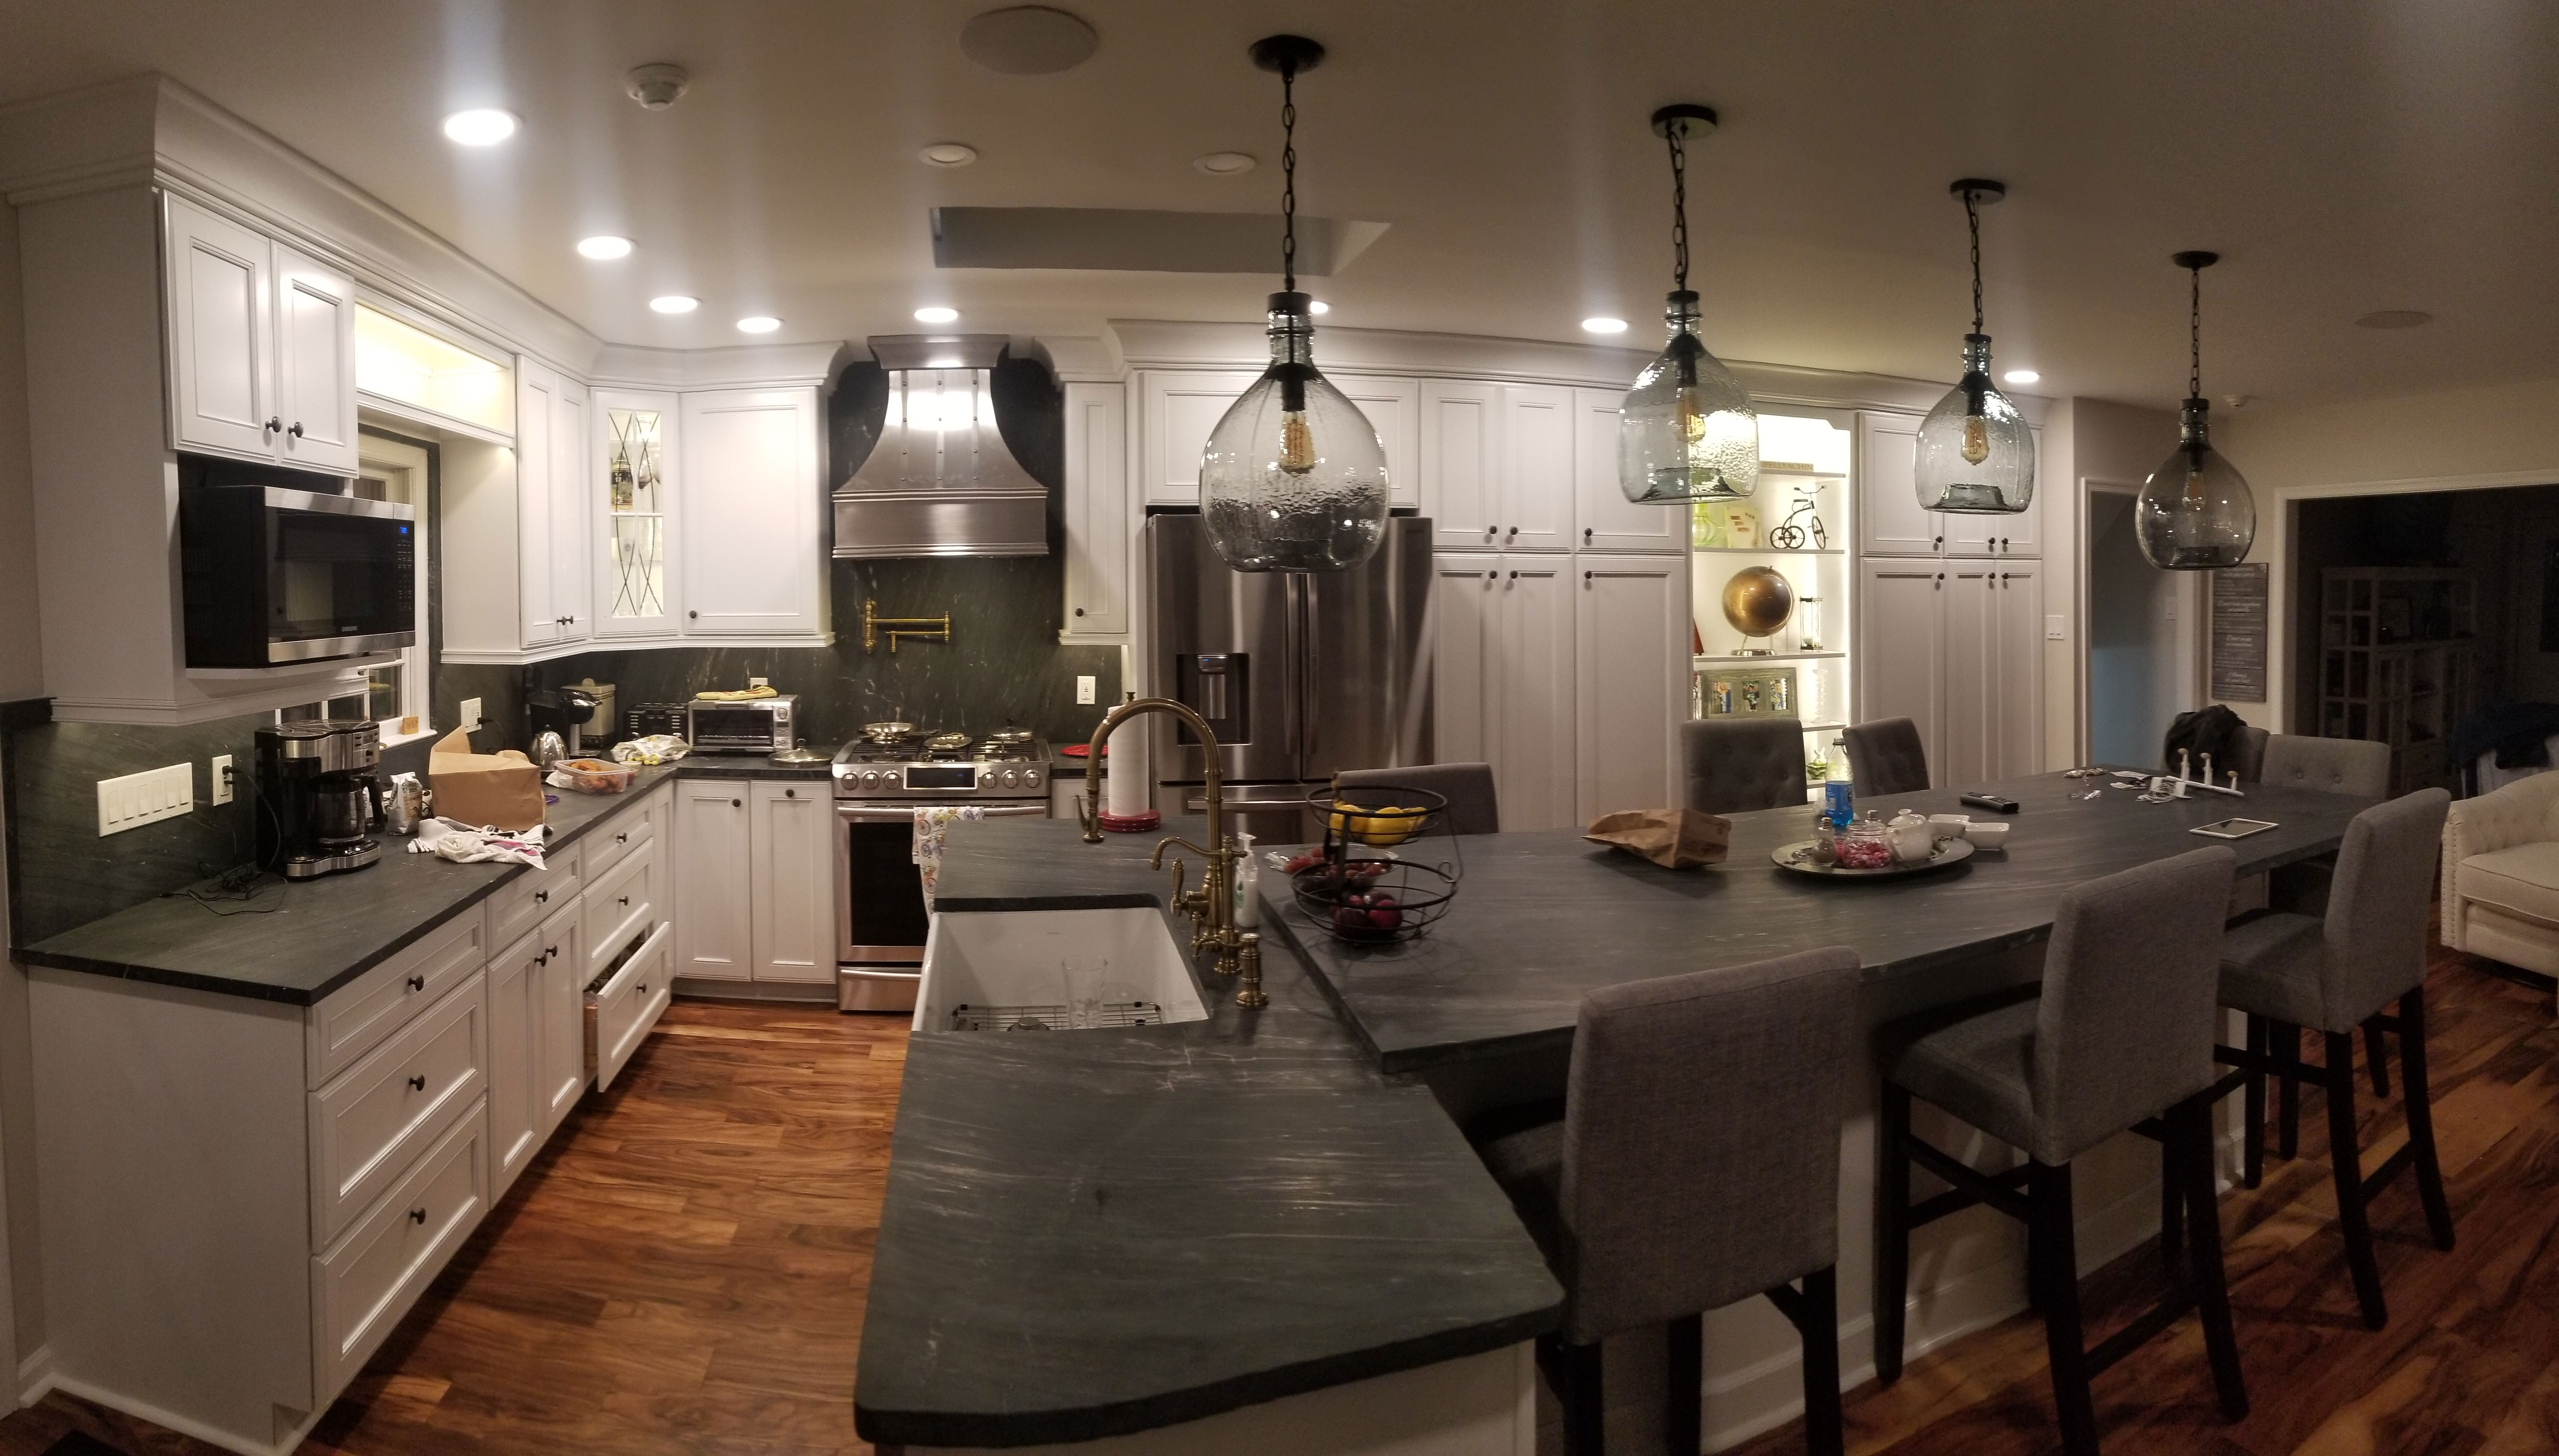 Exquisite kitchen with traditional design, range hood, showcasing elegant white kitchen cabinets, sleek grey kitchen countertops, stunning marble backsplash